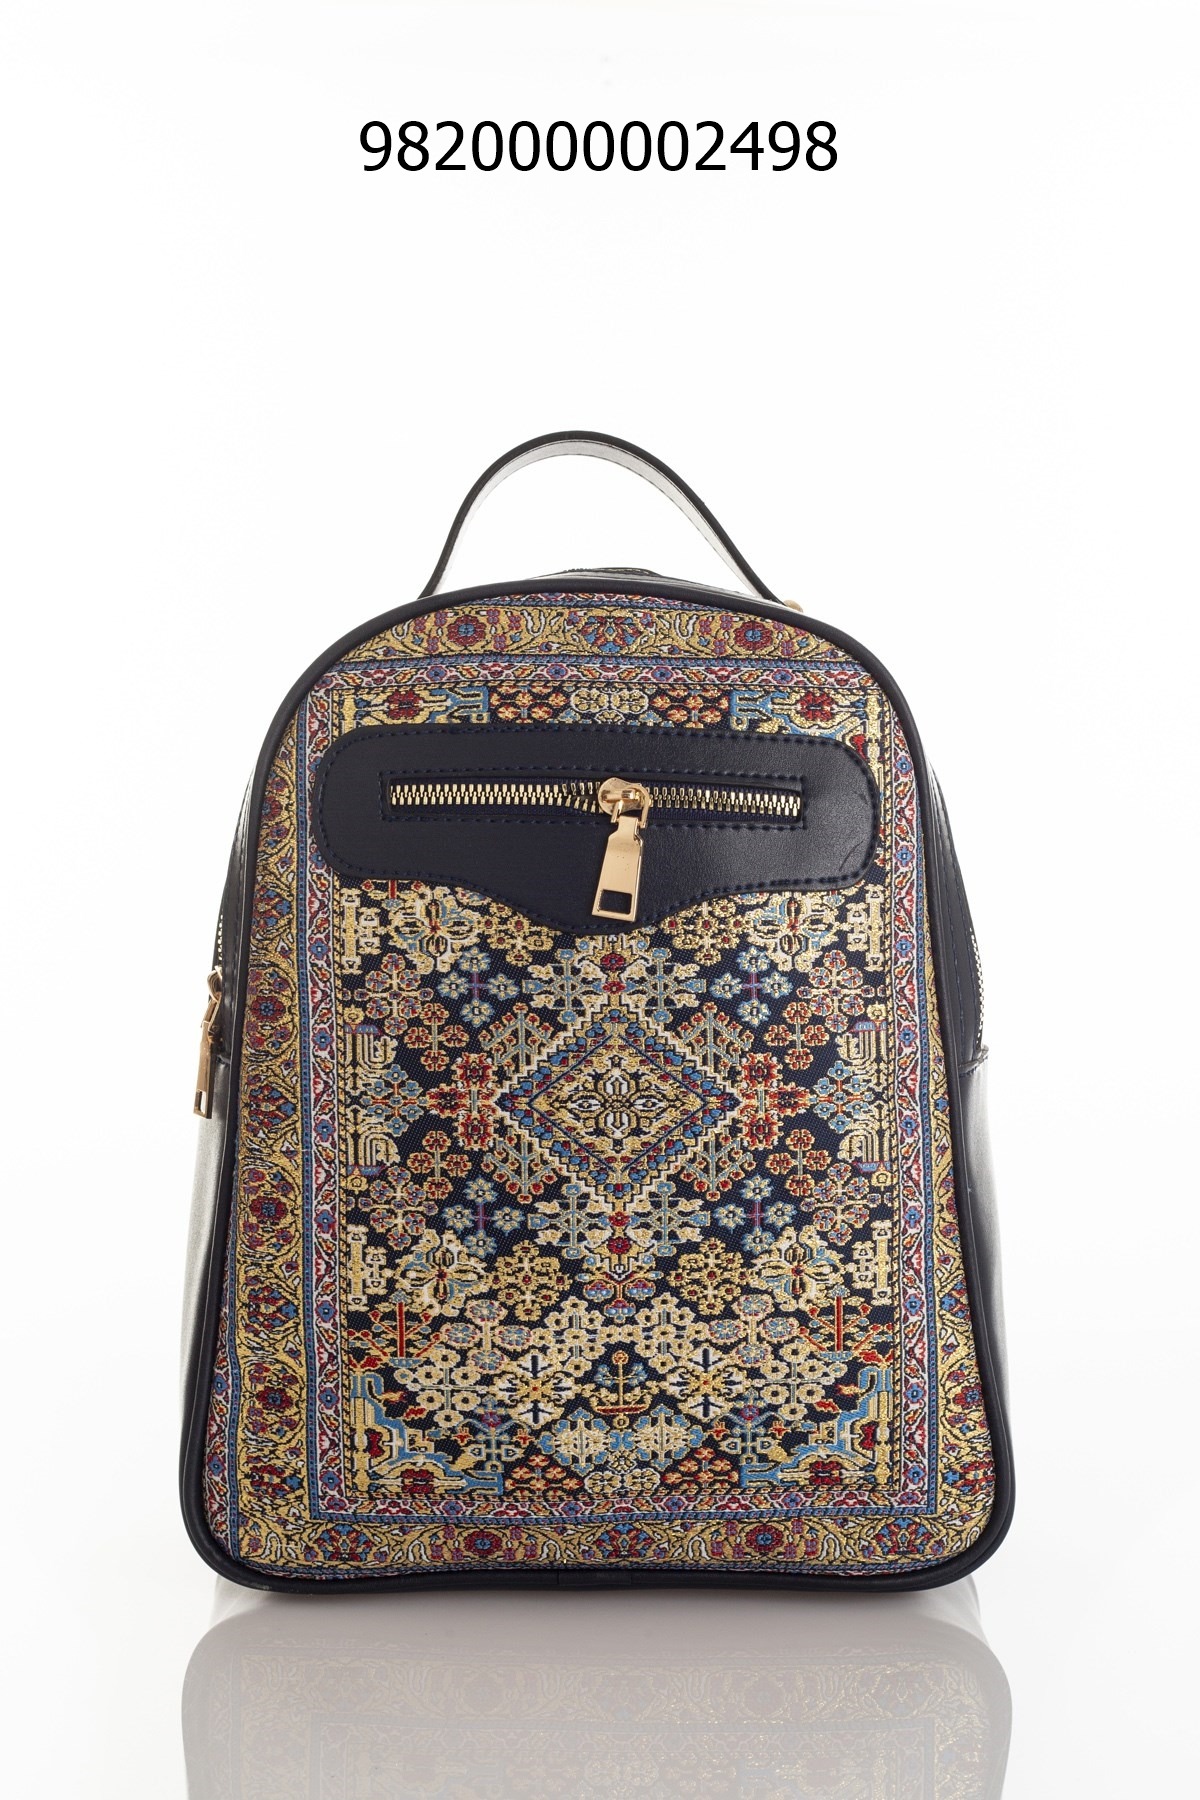 Boho Backpack/ Purse Mexican Woven by Mr Pinzon Artesanias Mexico Multi  Colors | eBay